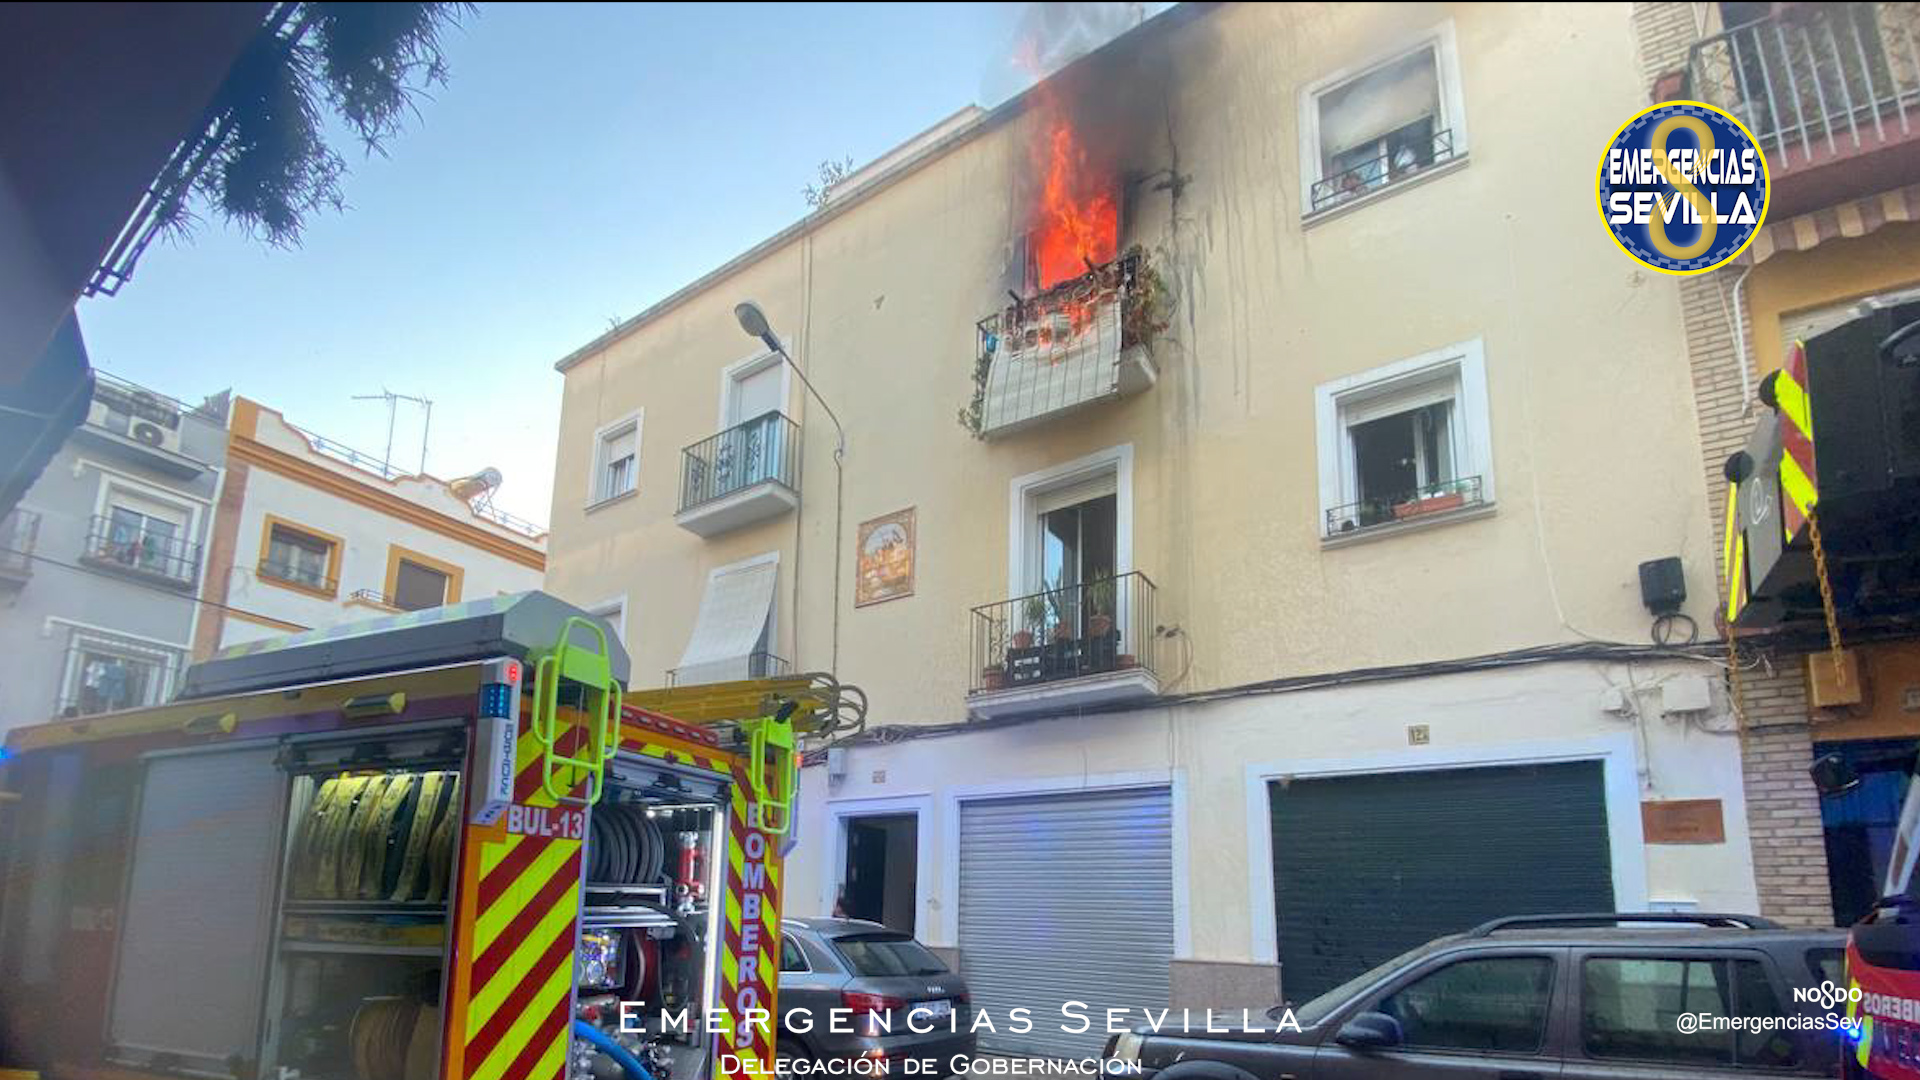 Fire in Enrique Mensac Street in Seville.